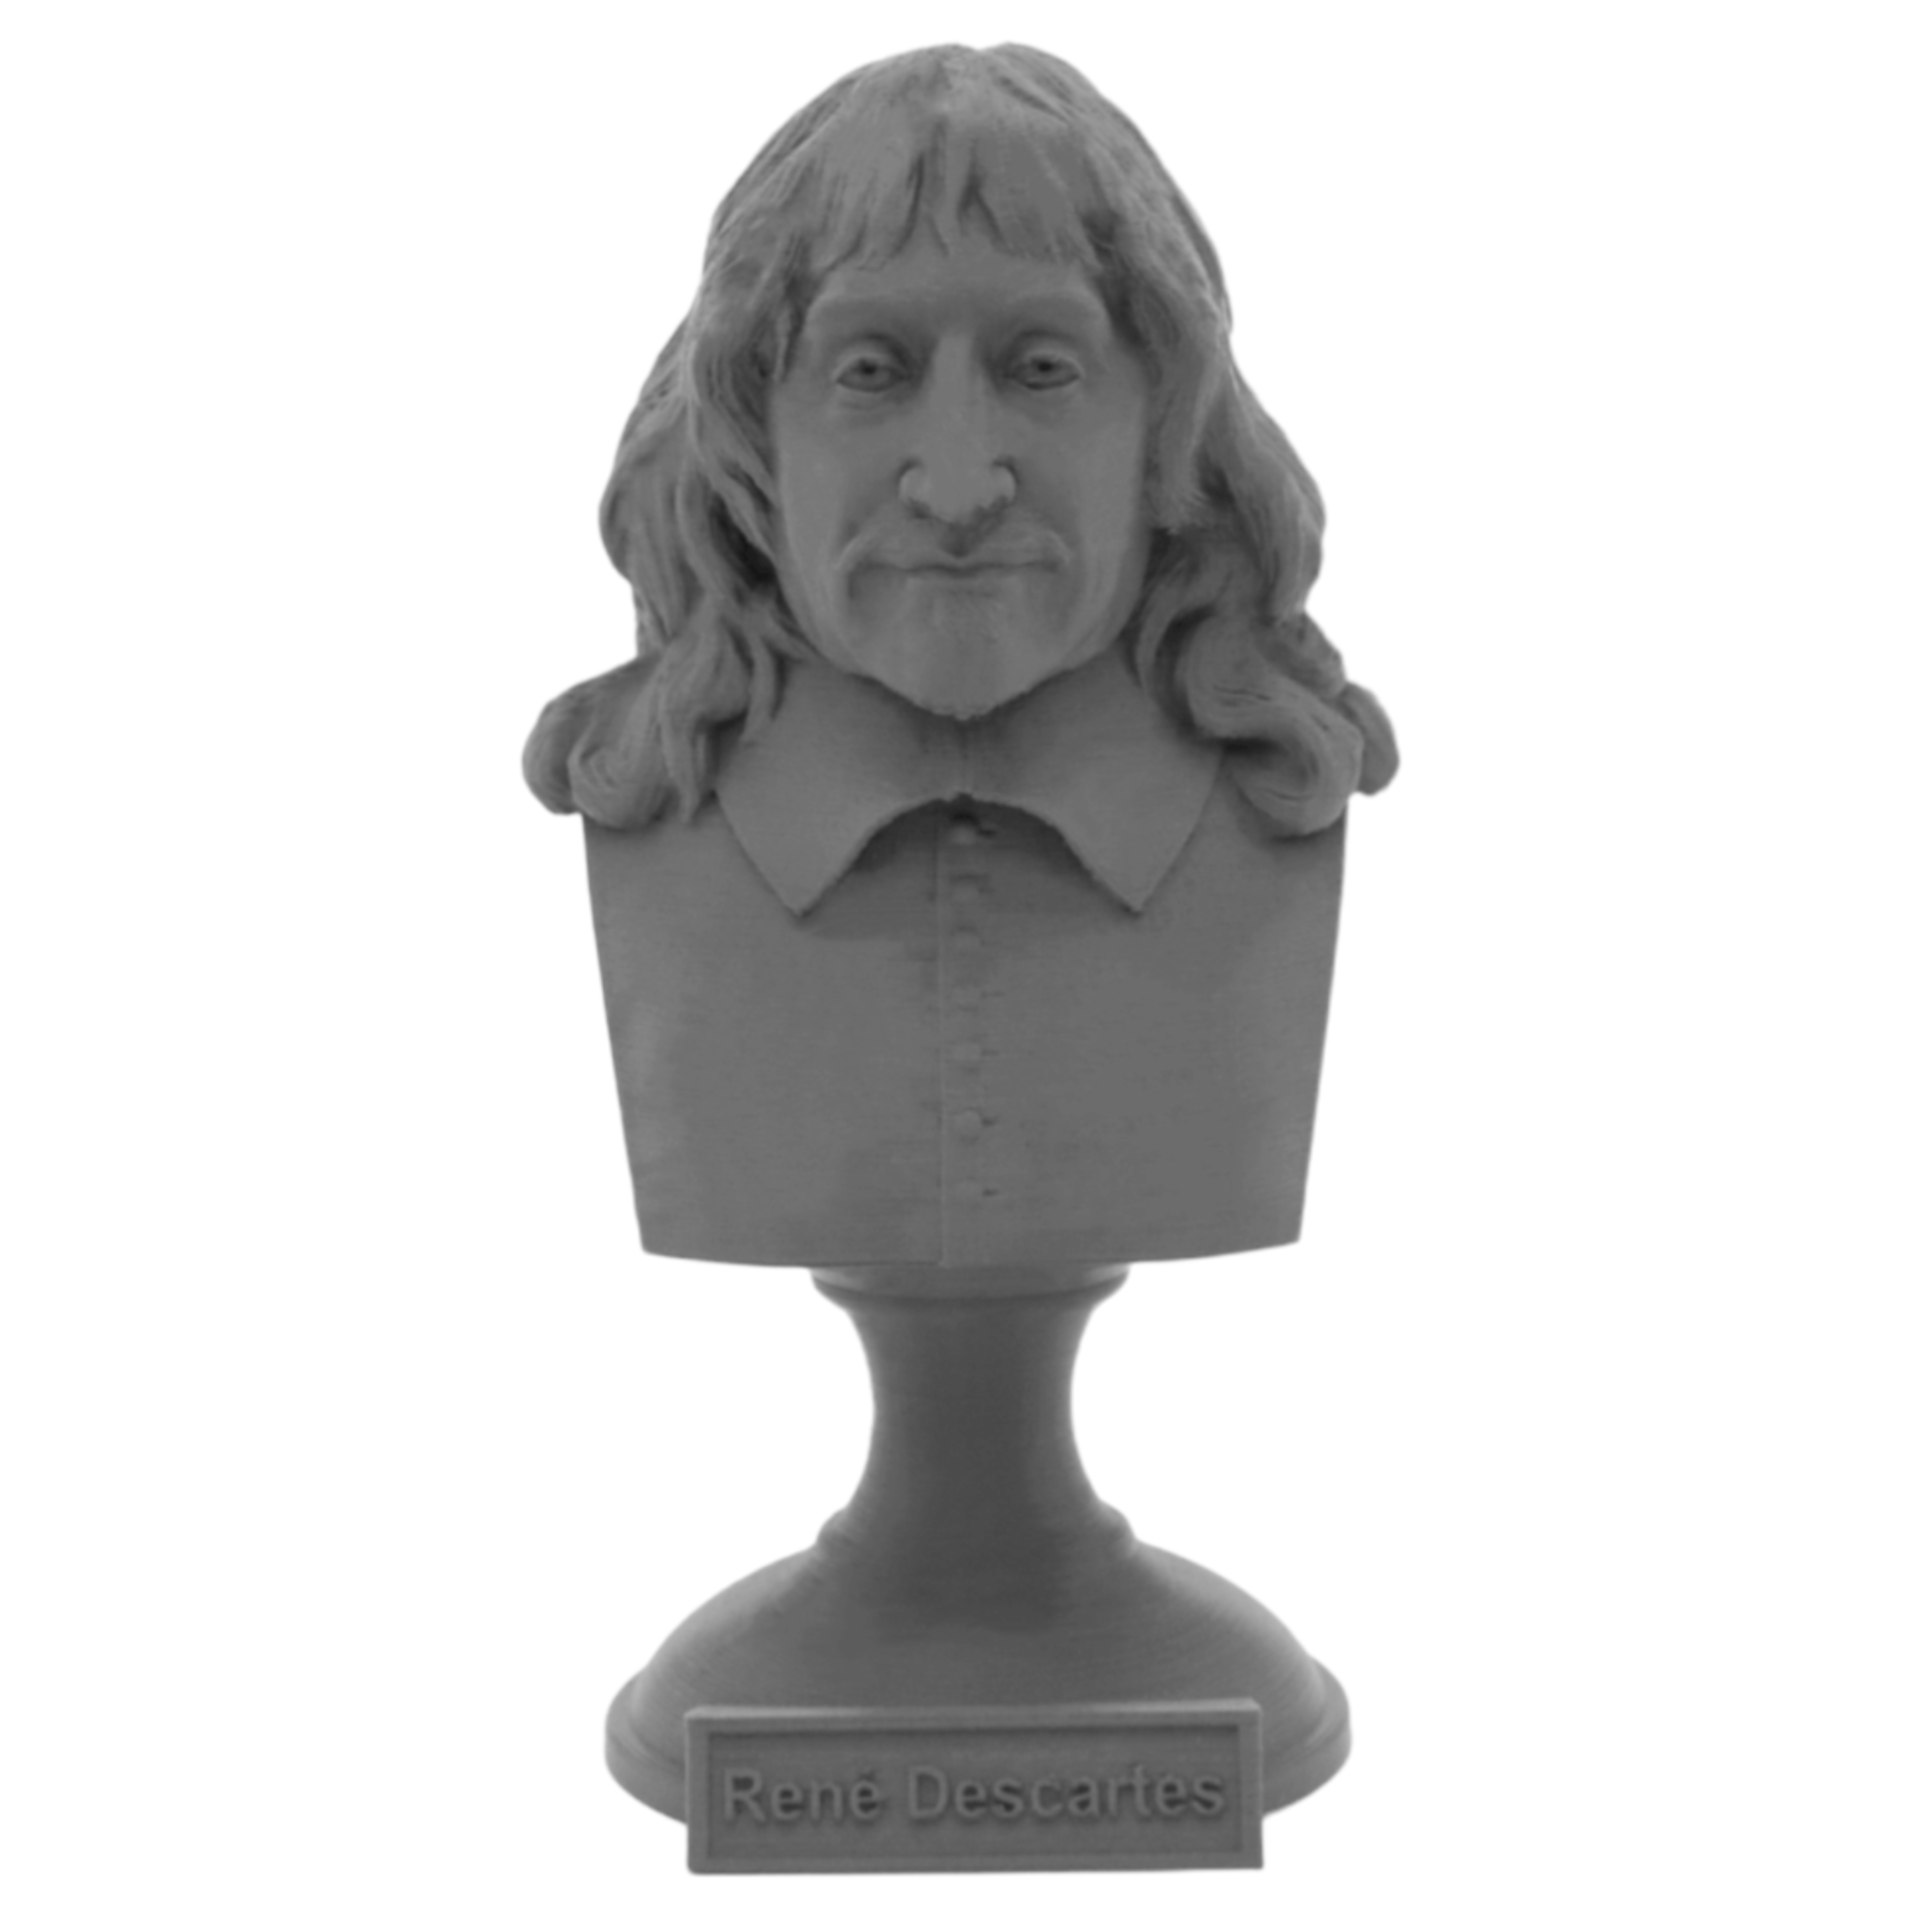 René Descartes French Philosopher, Mathematician, and Scientist Sculpture Bust on Pedestal